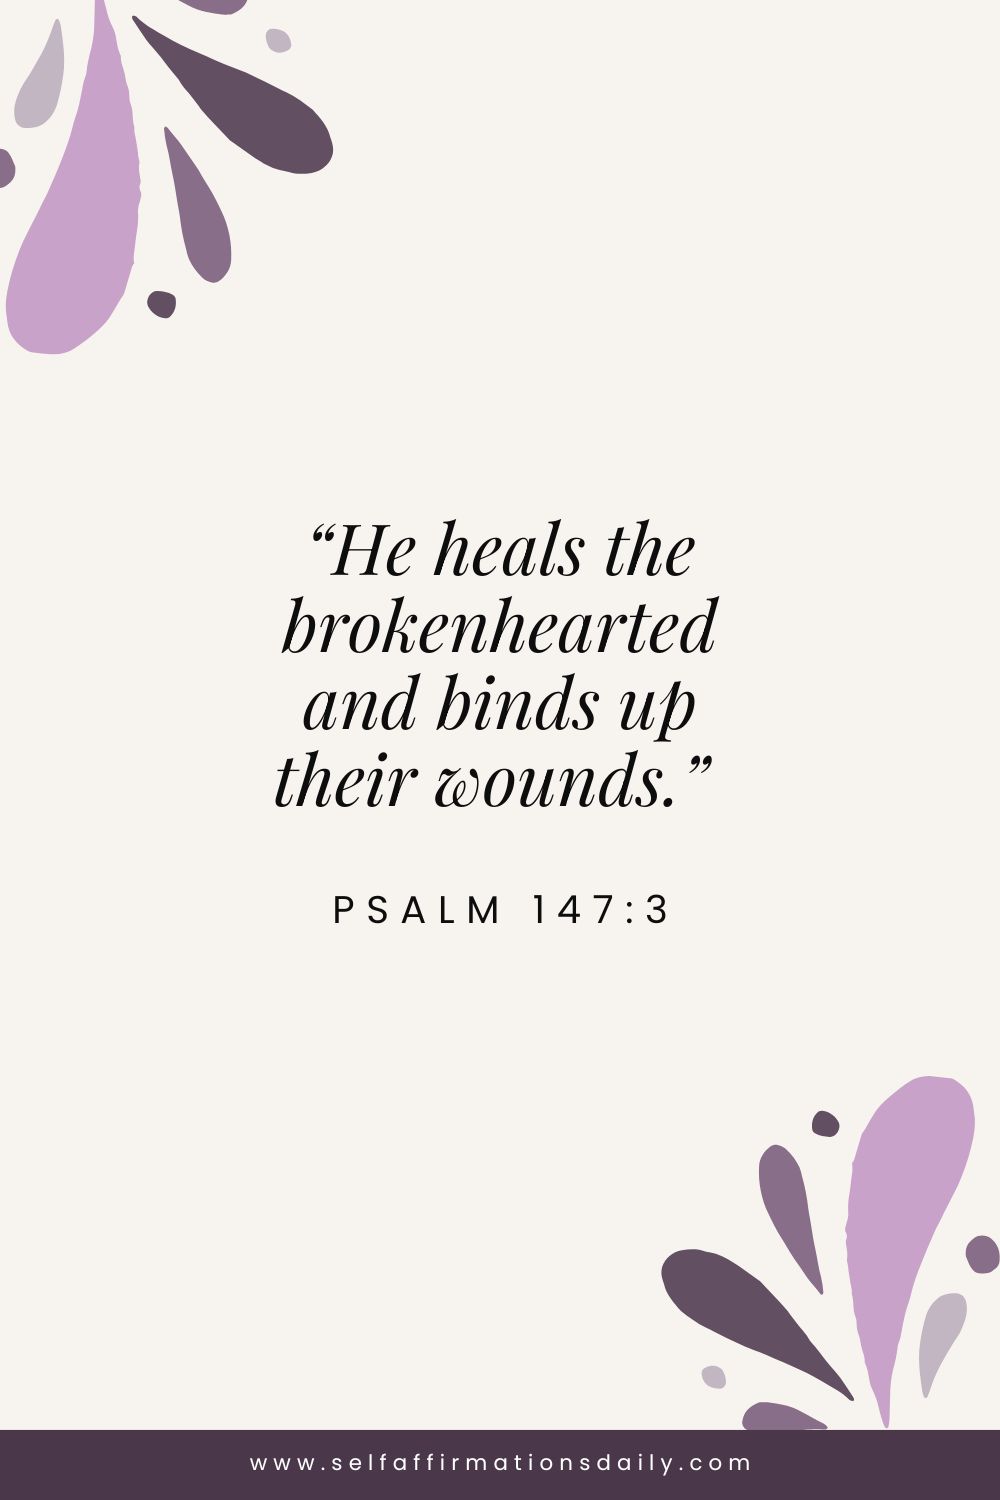 Psalm 147:3